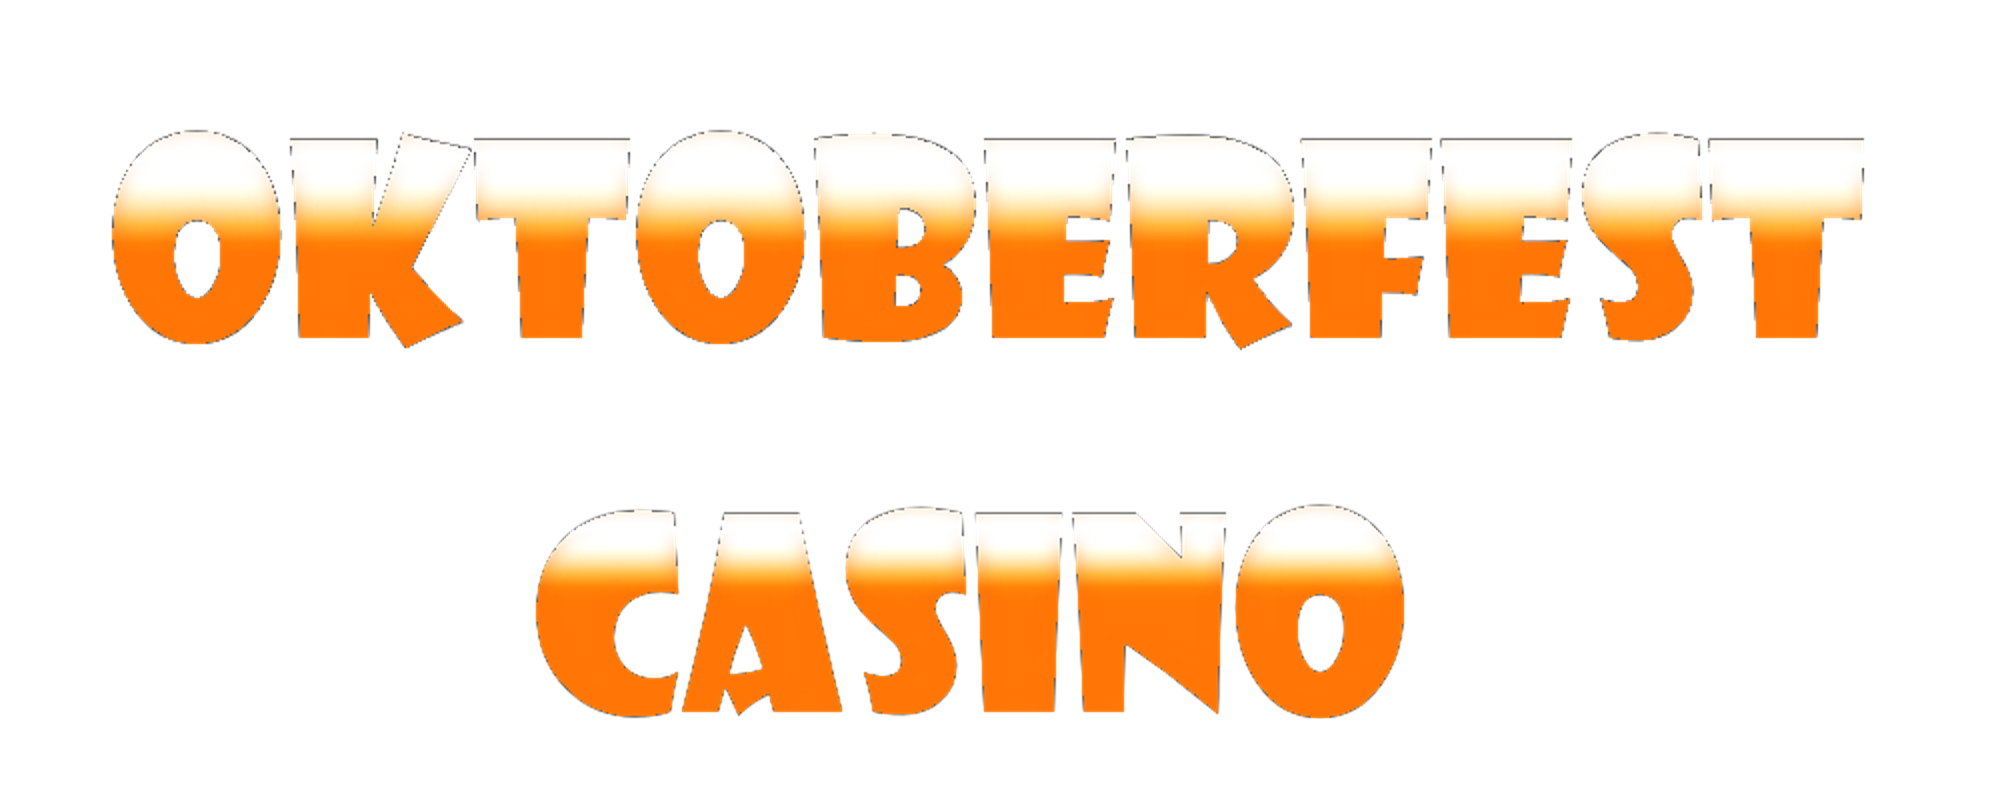 Oktoberfest Casino